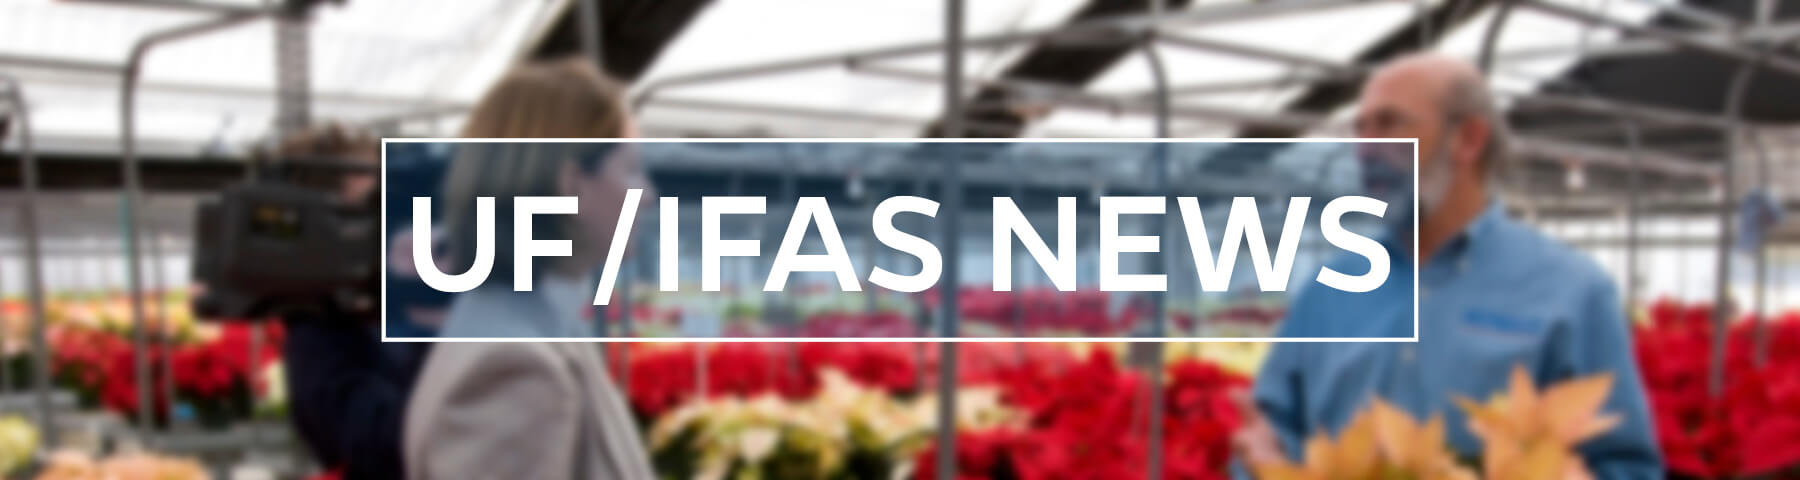 UF/IFAS News